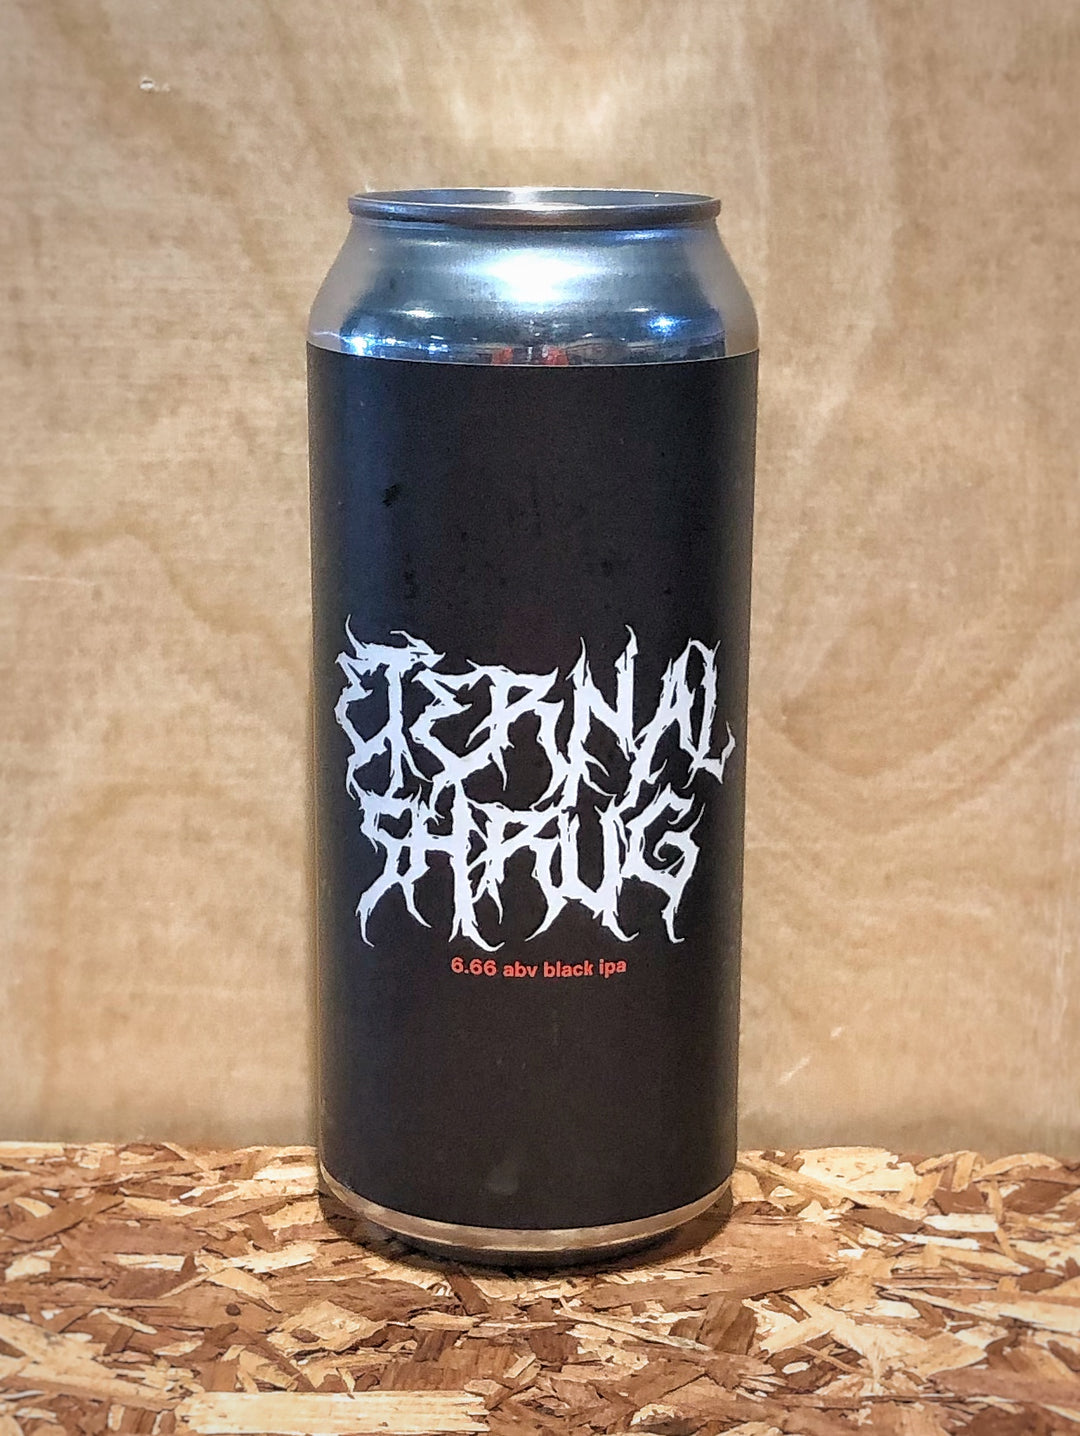 Fair State 'Eternal Shrug' Black IPA (Minneapolis, MN)